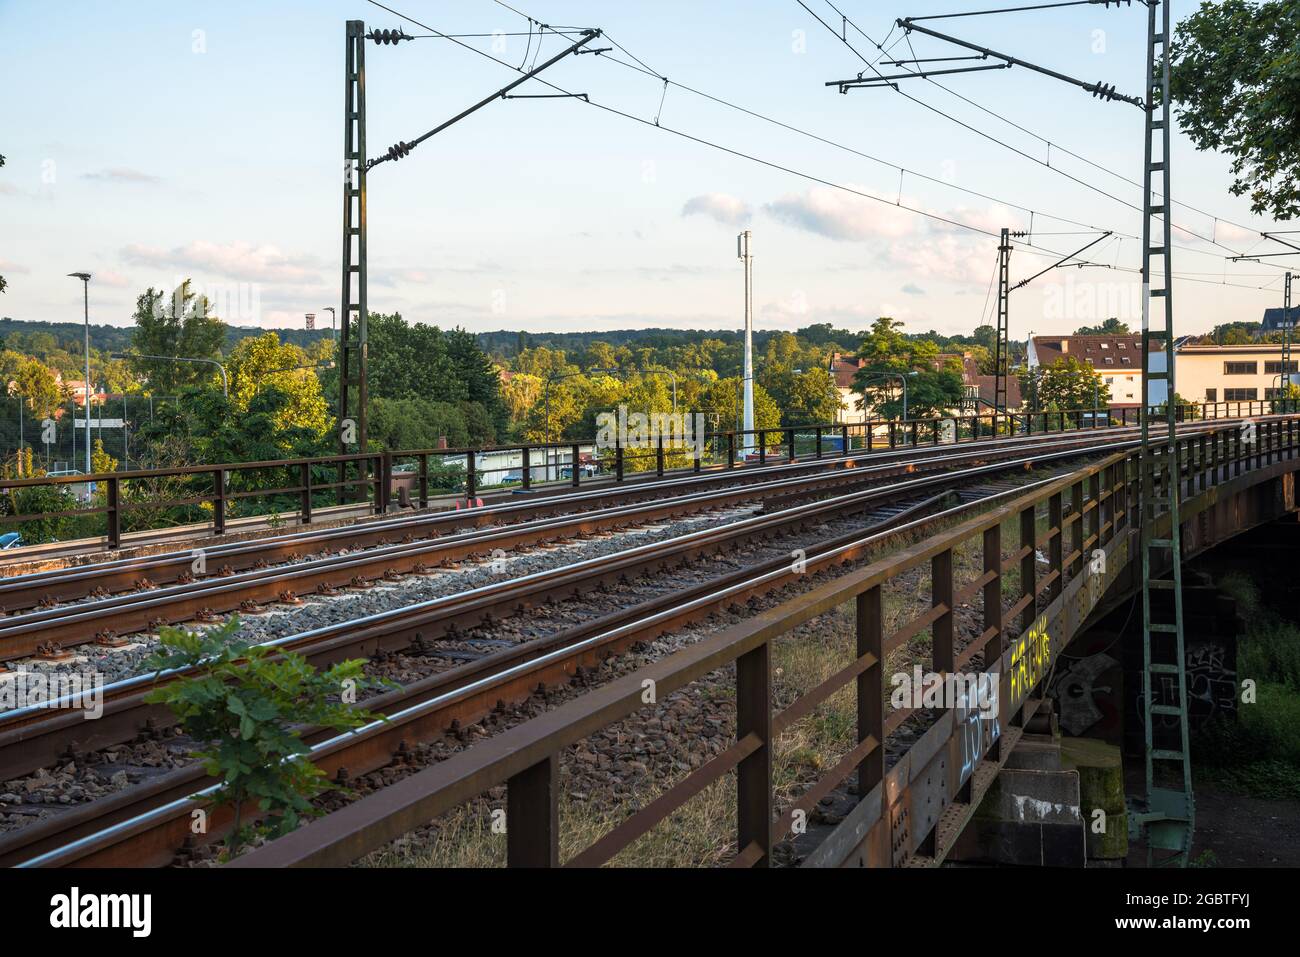 Deserted elevated railway at sunset Stock Photo